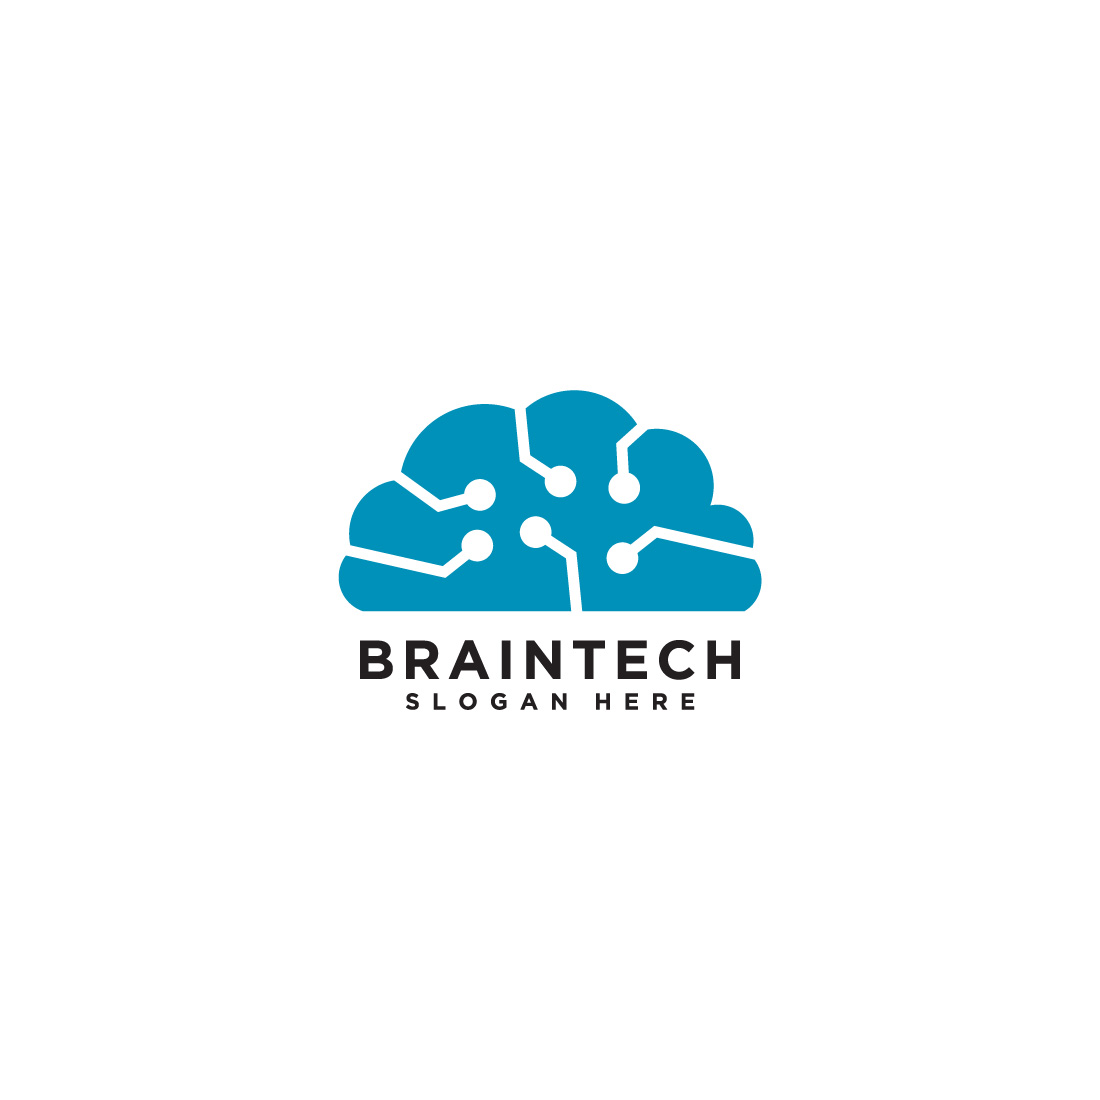 Brain technology logo design template cover image.